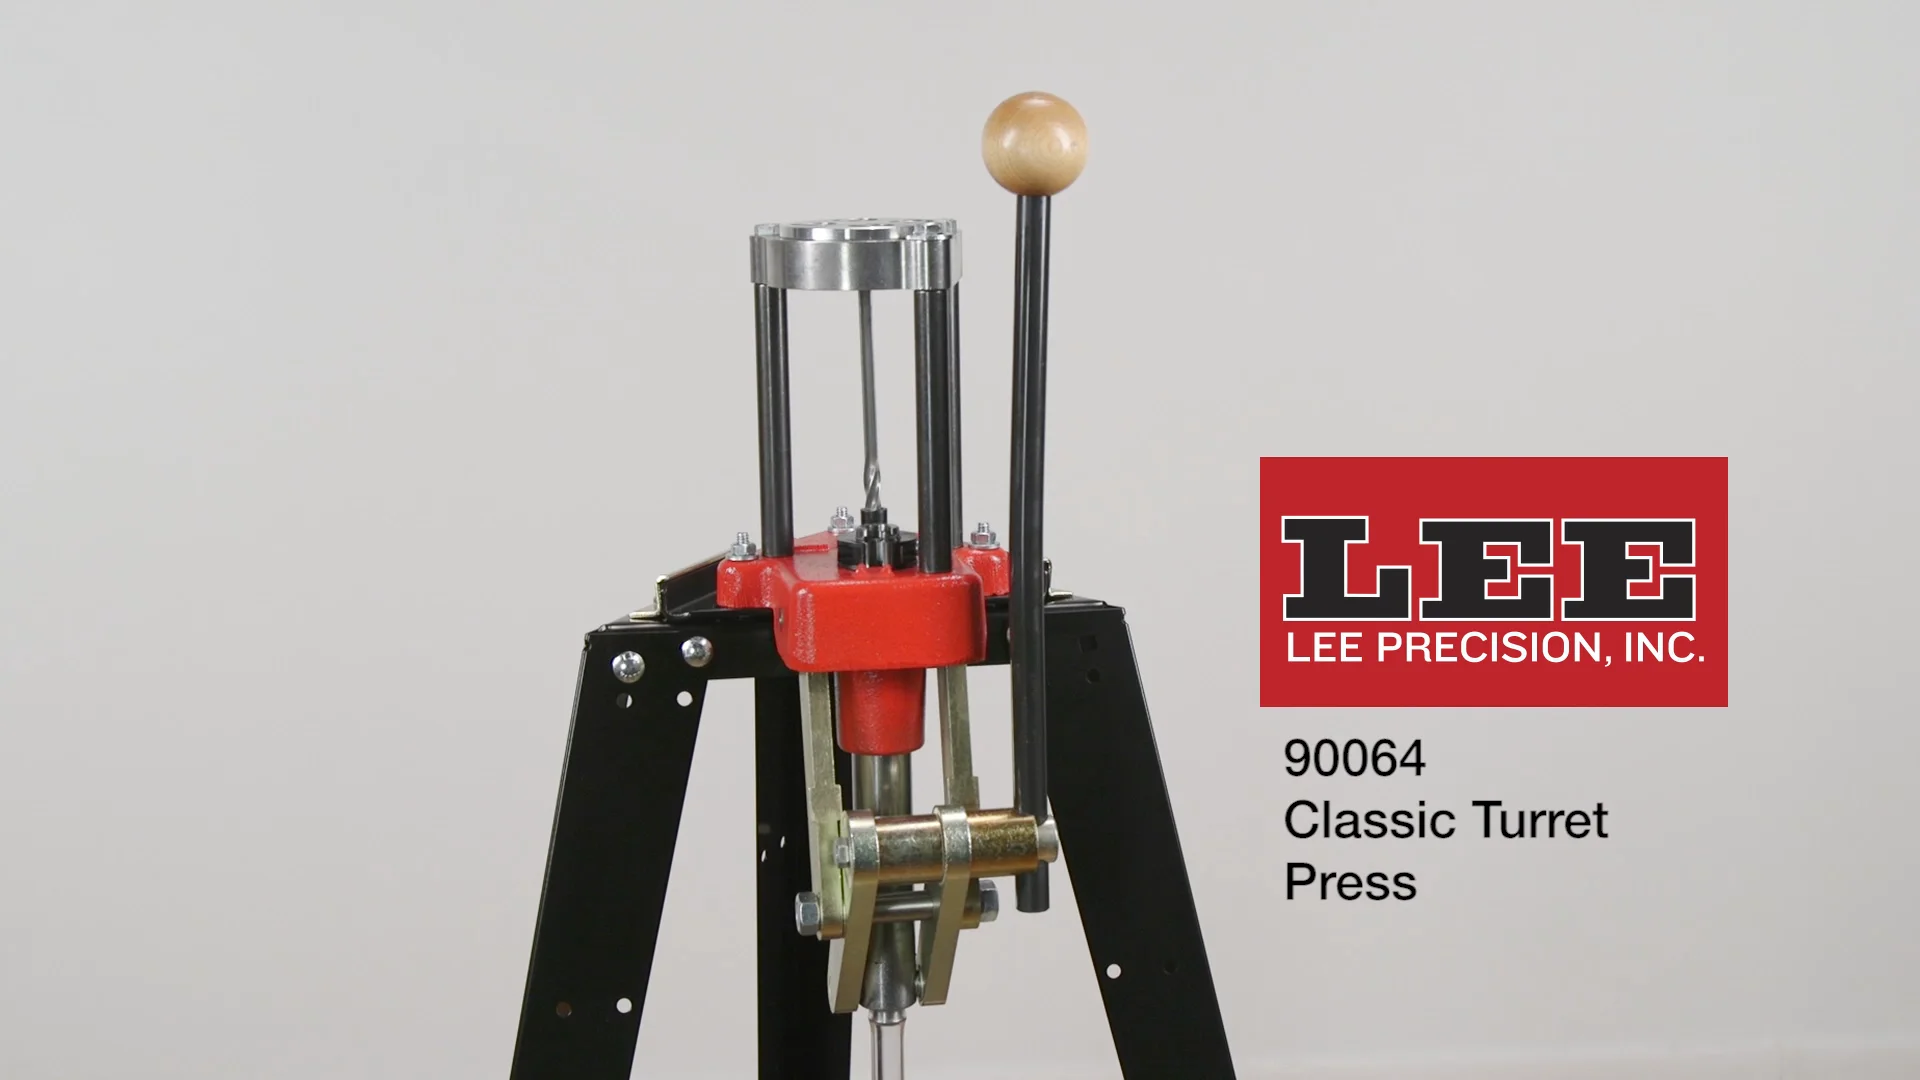 Lee Precision, Inc. 90998 Classic Cast Press Setup in 50 BMG 360 Degree  View on Vimeo